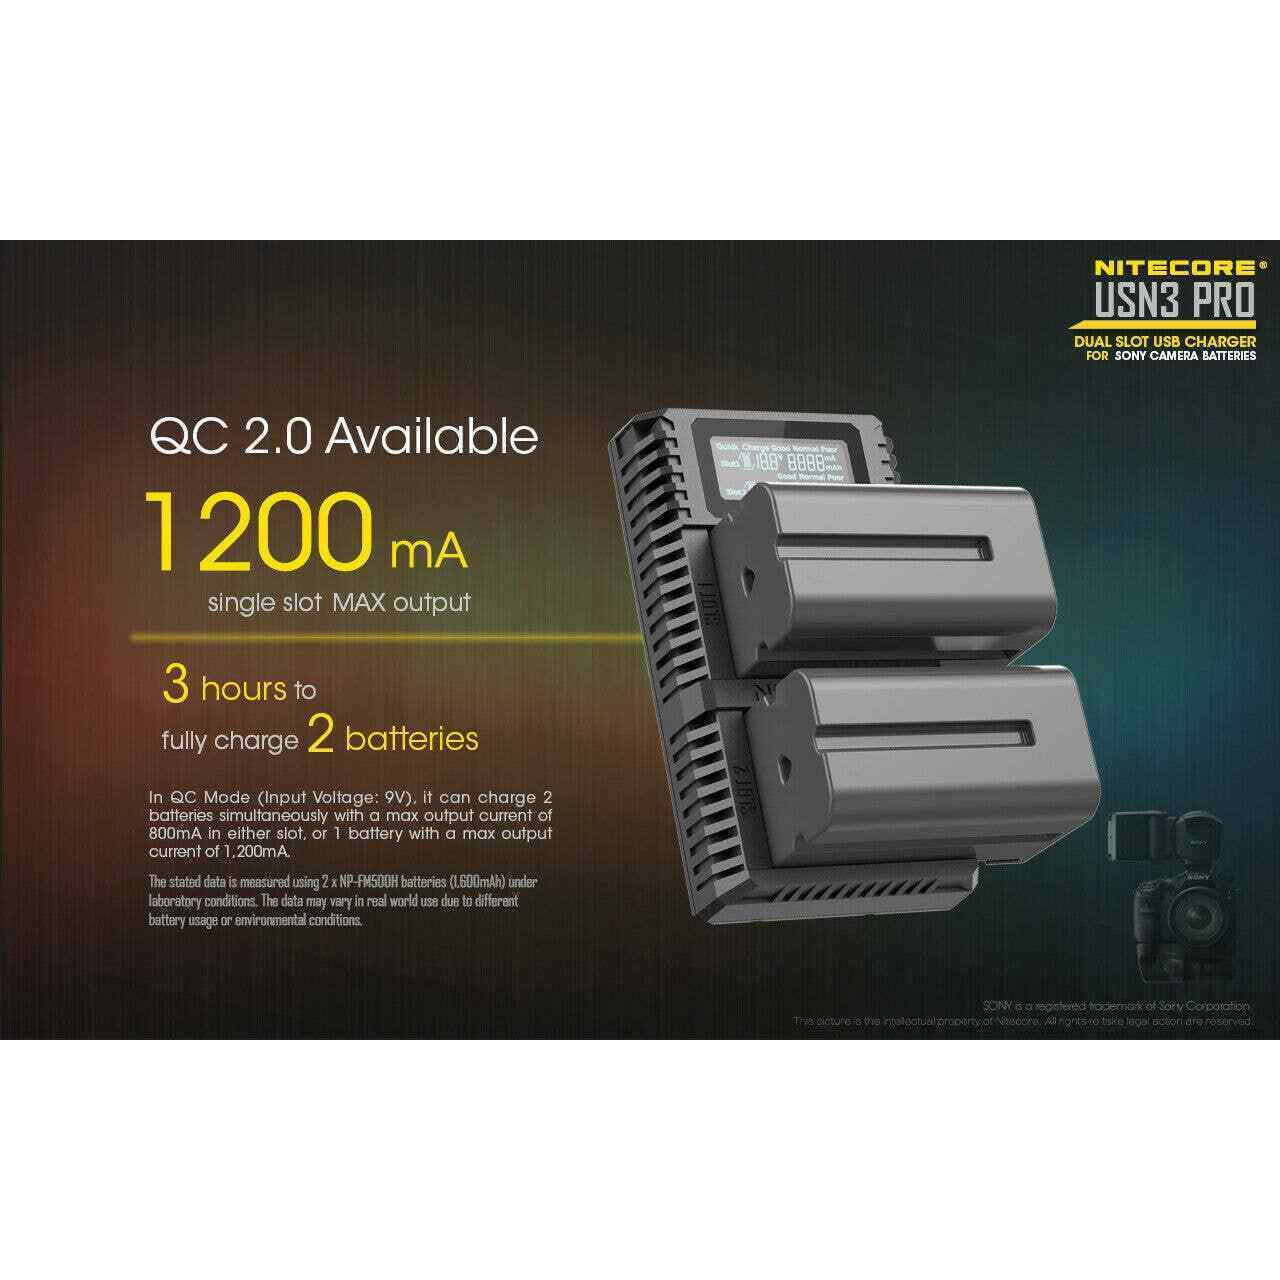 Nitecore Nitecore Pro Digital Double Usb Charger - For Sony Camera Battery #usn3Pro Dark Olive Green